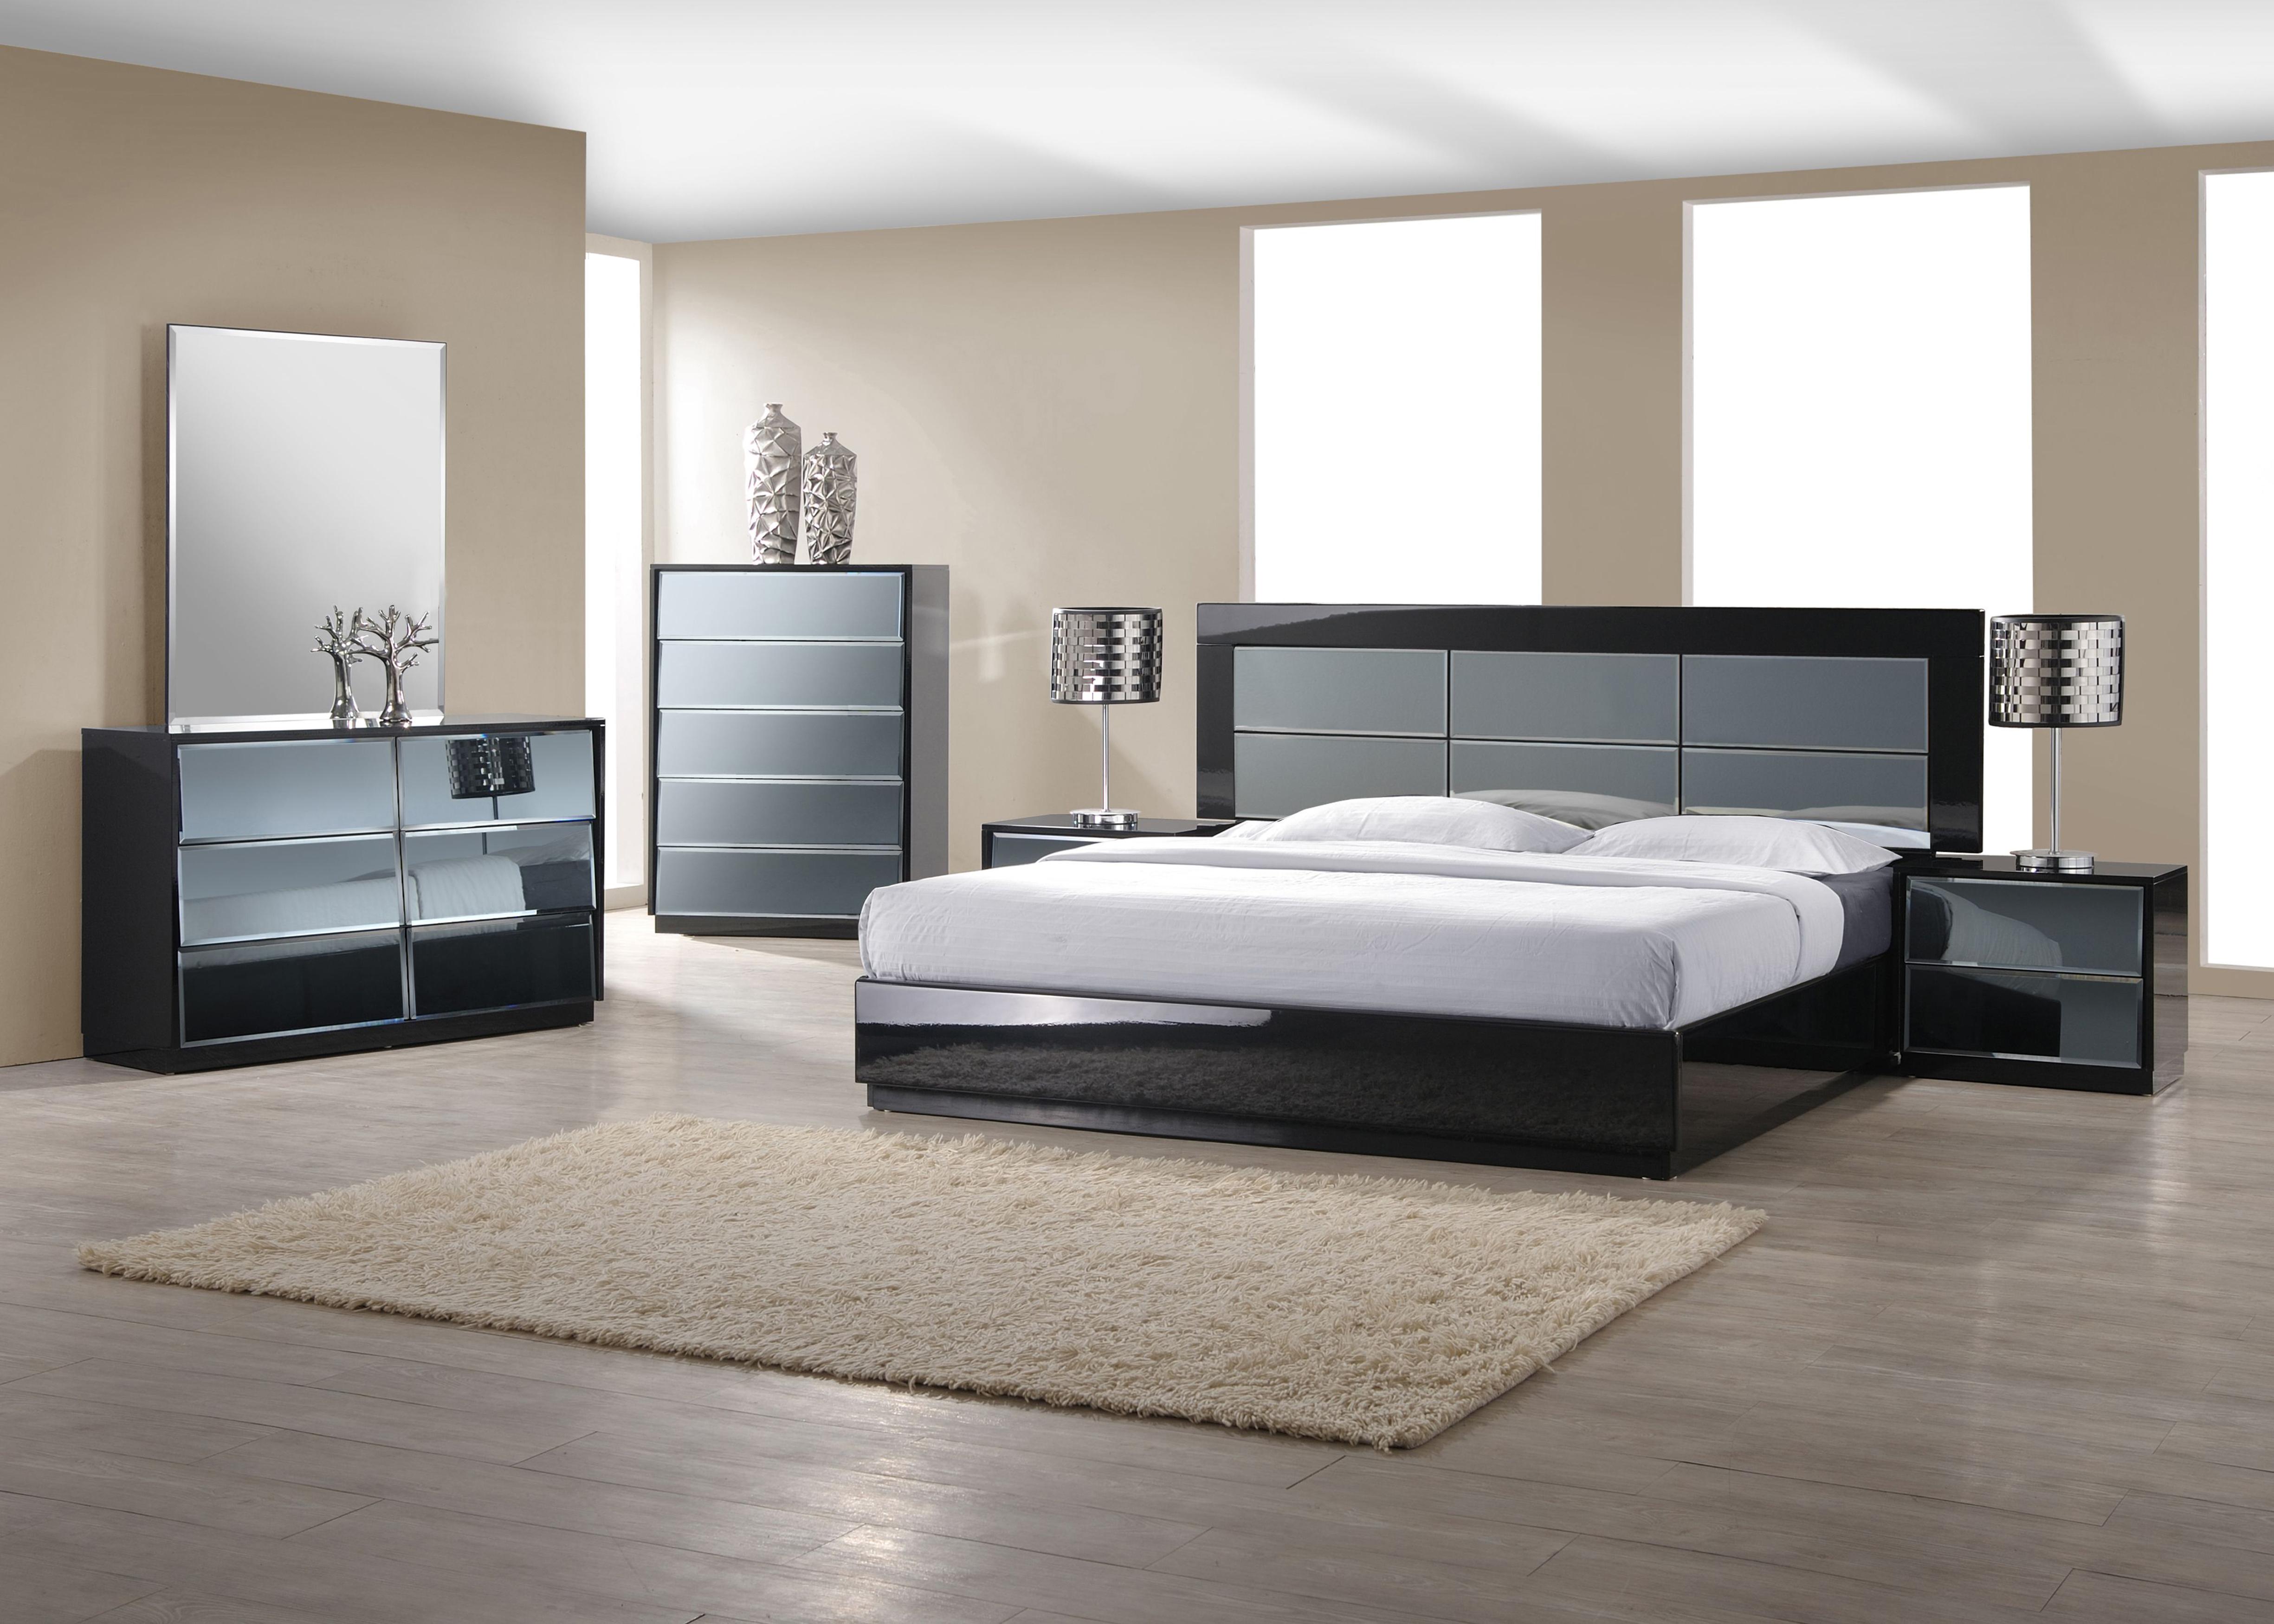 

    
VENICE-KING-2N-3PC Chintaly Imports Platform Bedroom Set
